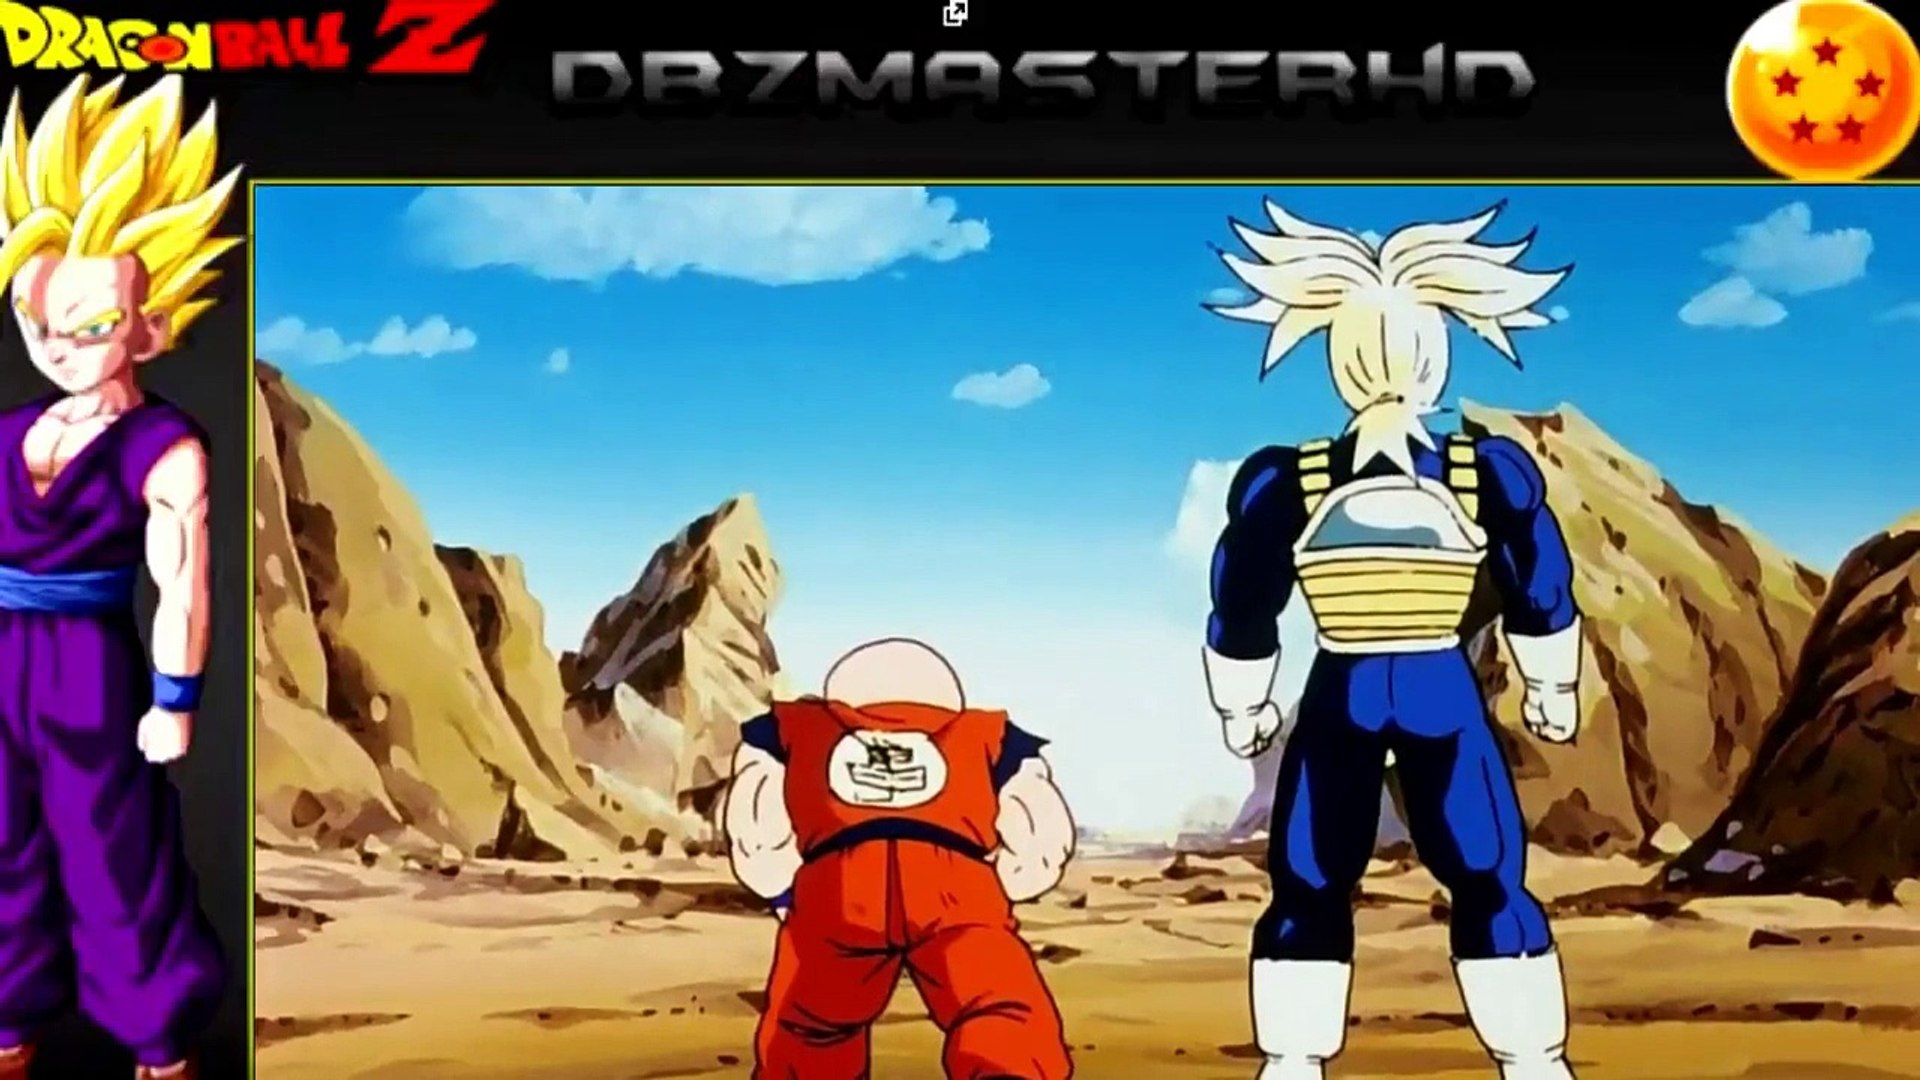 SSJ2 Goku vs Majin Vegeta Full Fight - video Dailymotion